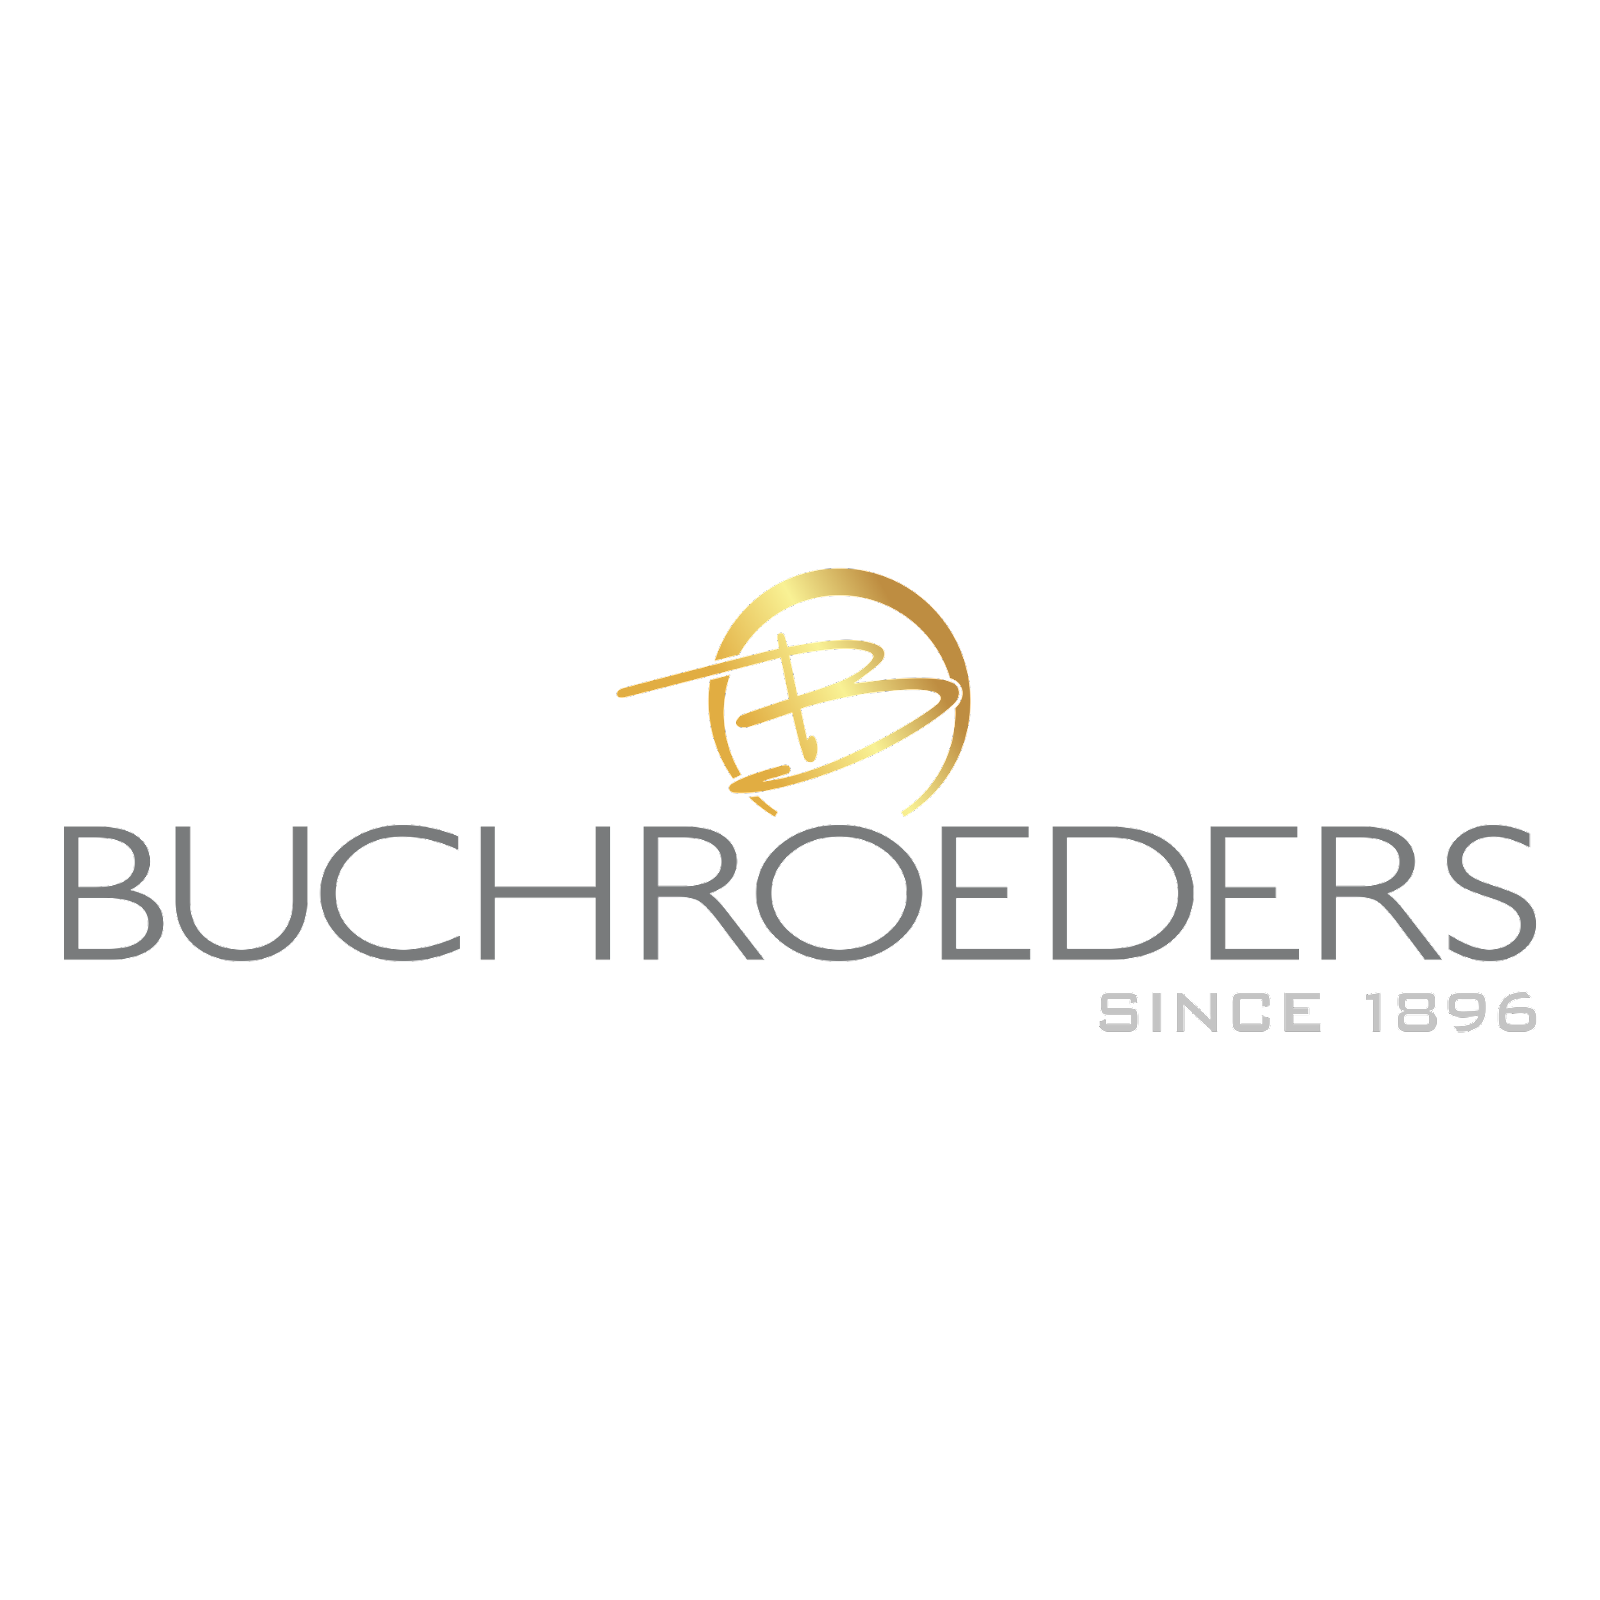 Buchroeders Jewelers - Columbia, MO 65201 - (573)443-1457 | ShowMeLocal.com